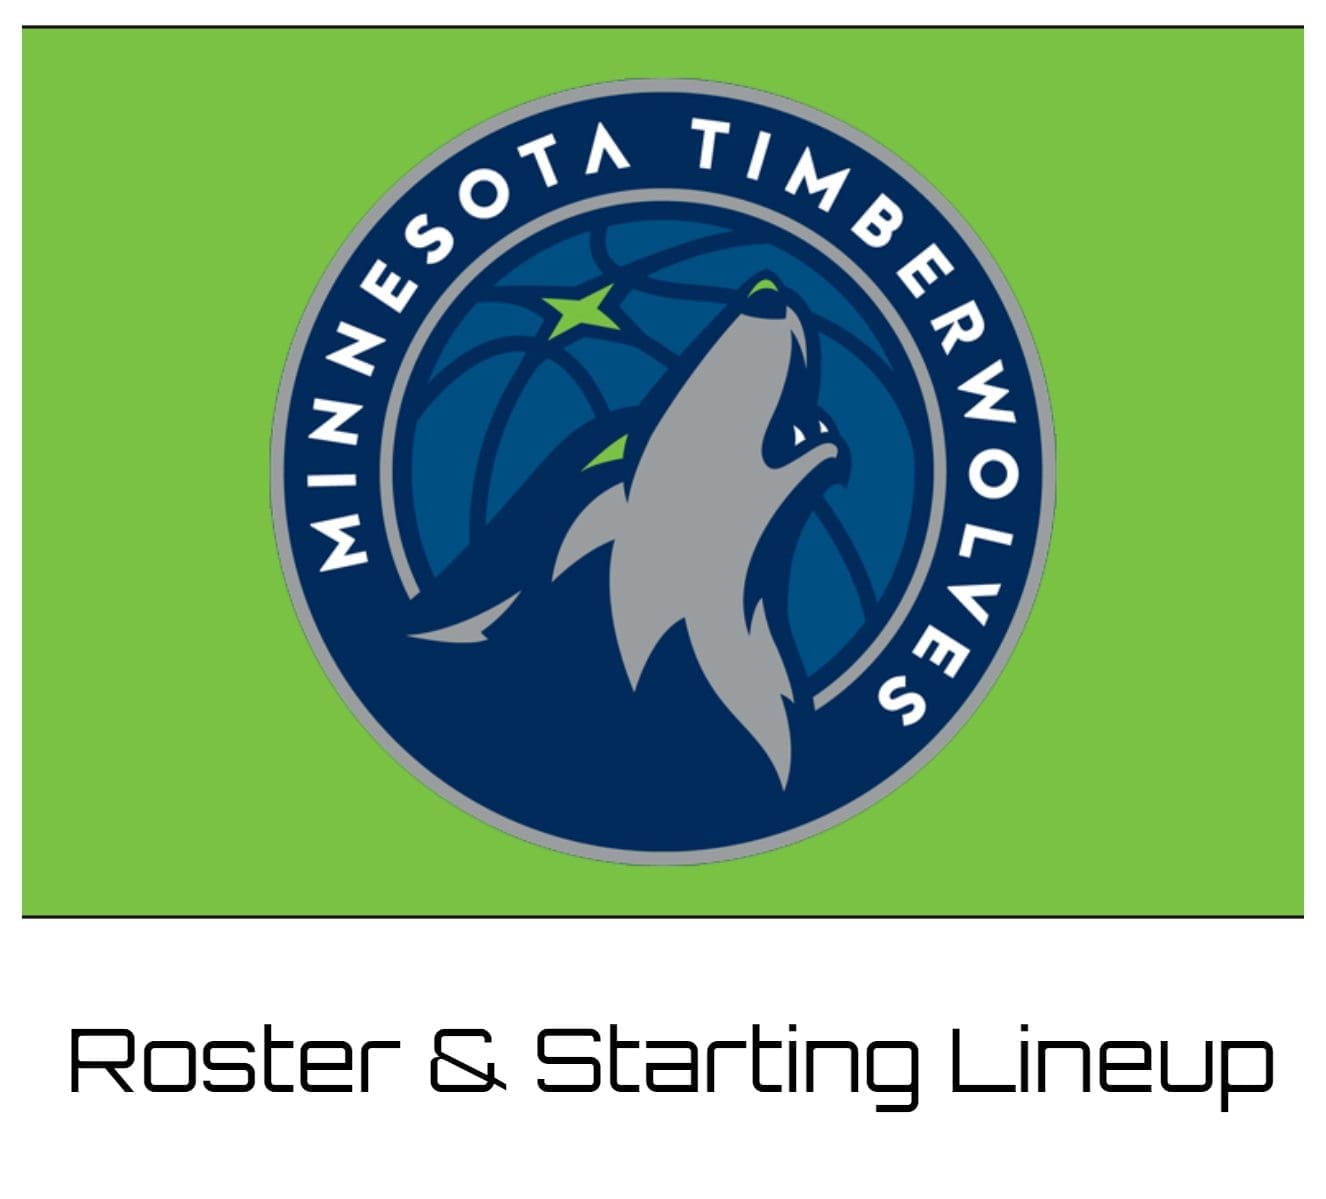 Minnesota Timberwolves Roster